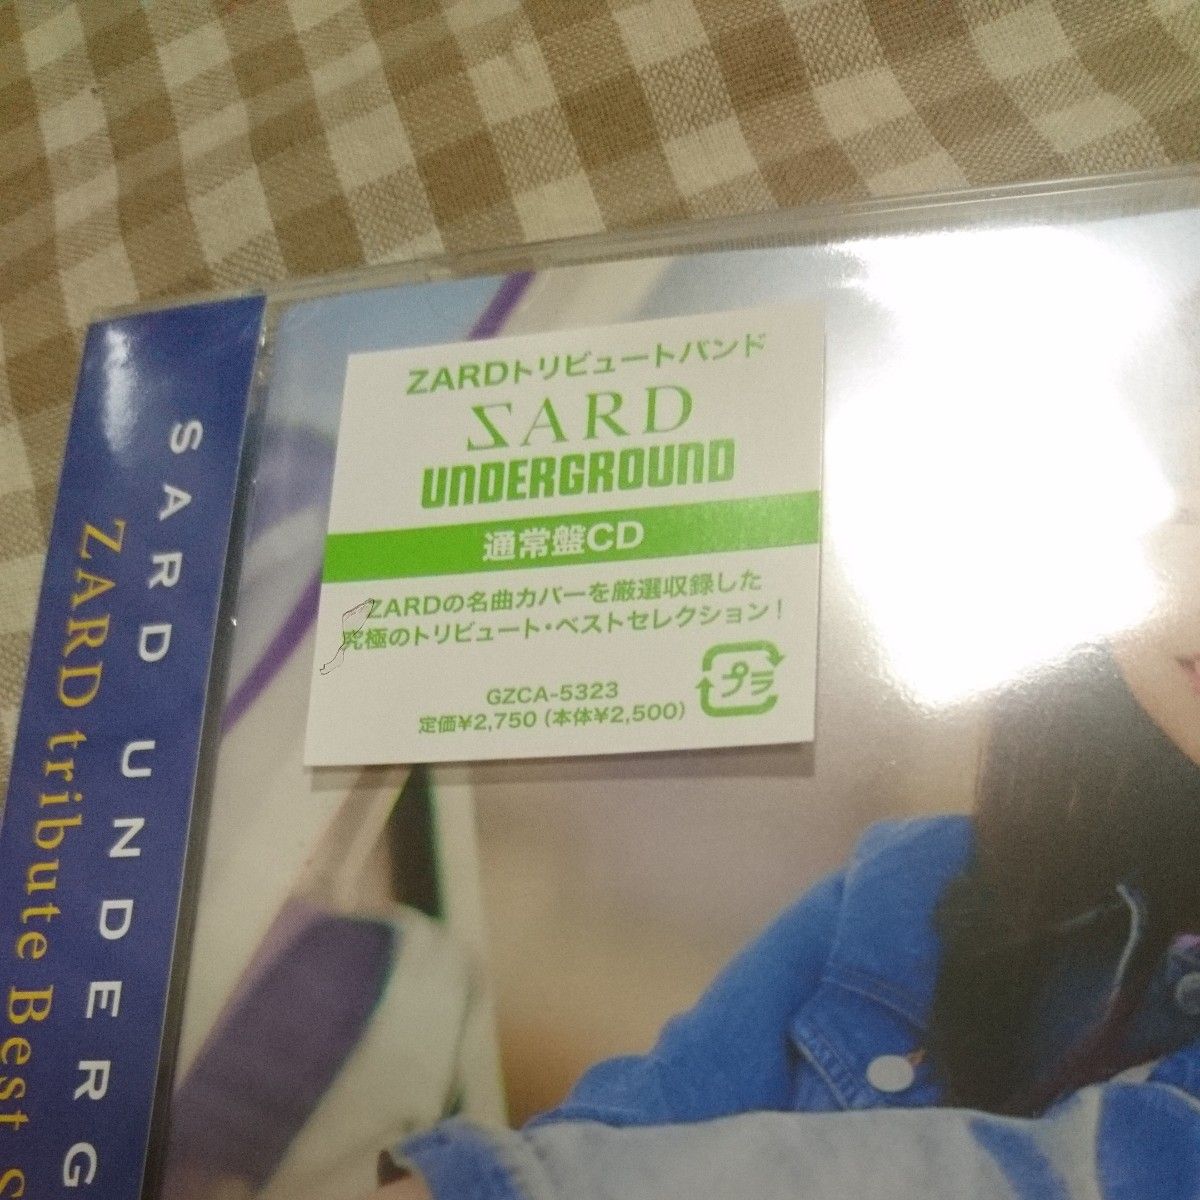 通常盤 SARD UNDERGROUND CD/ZARD tribute Best Selection 24/3/20発売 